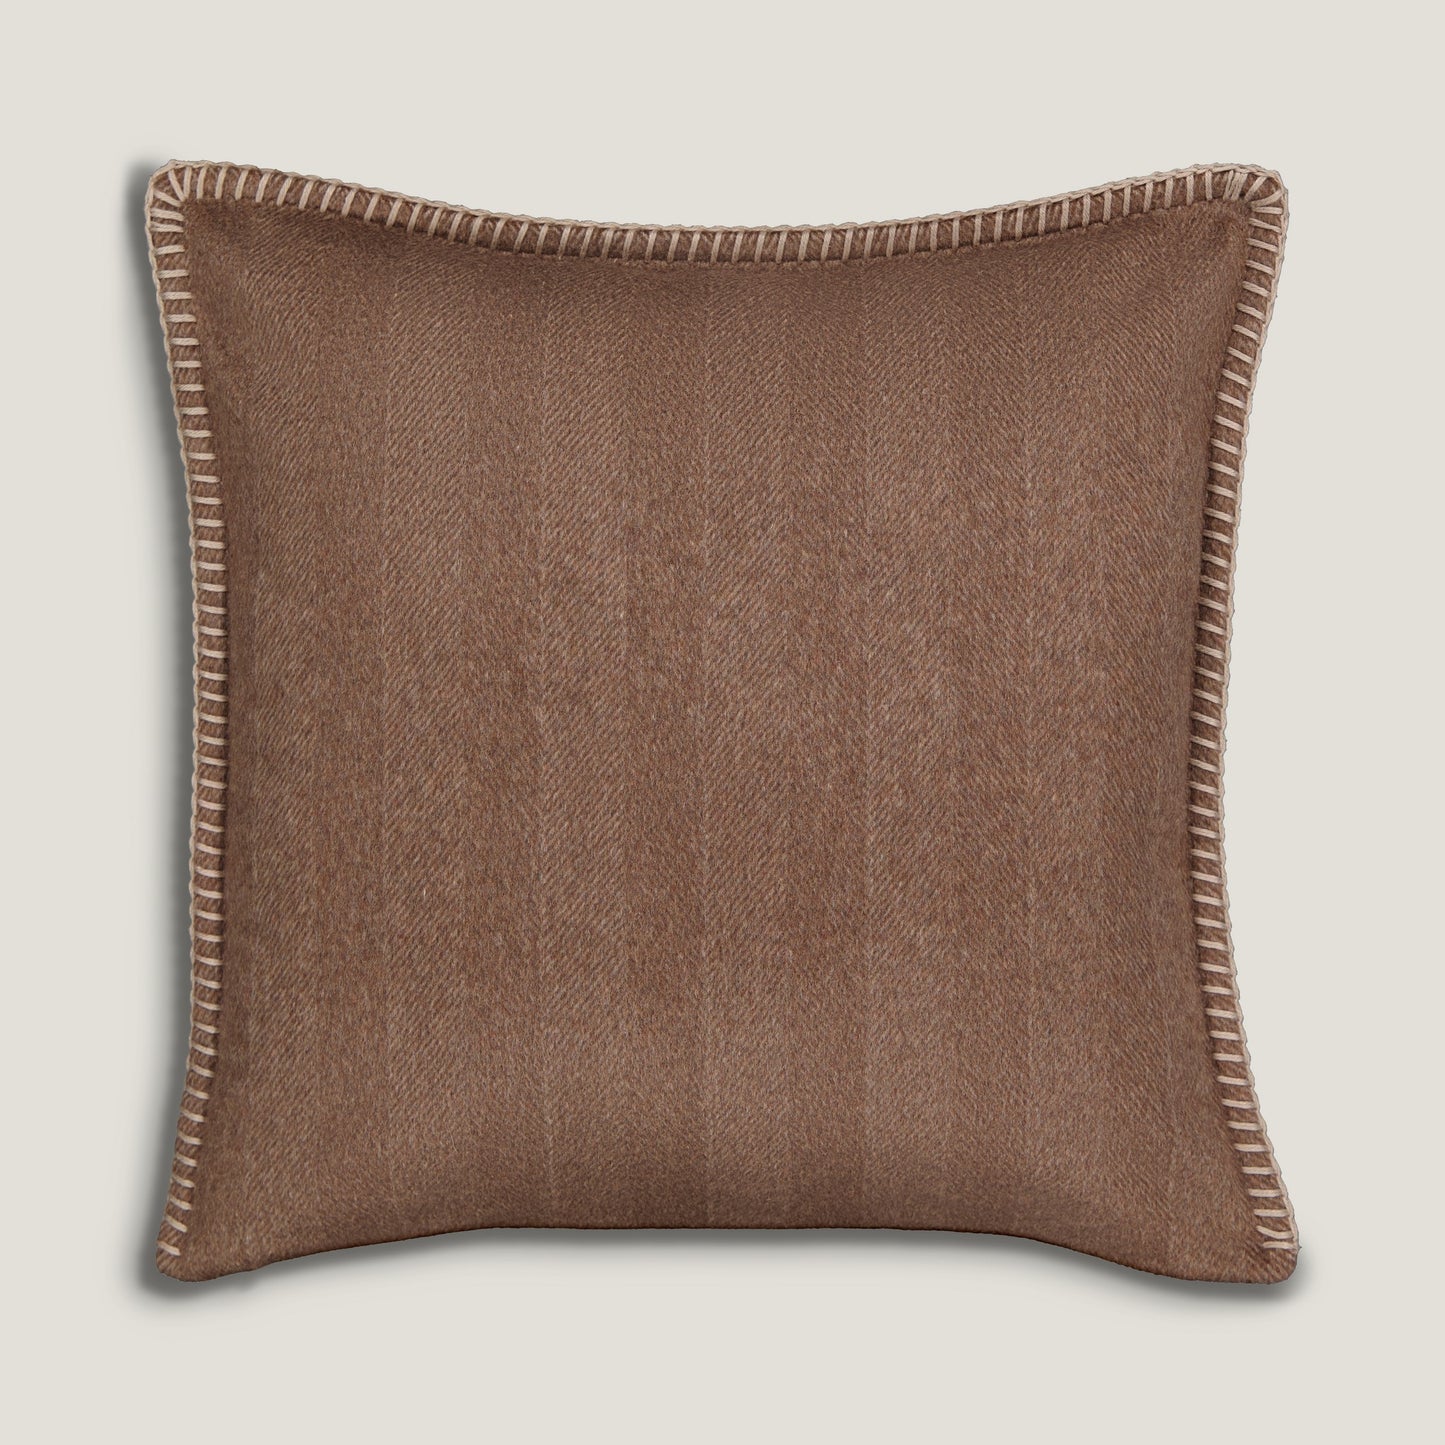 Pure Cashmere Pillow Cover Camel キャメル 驼色